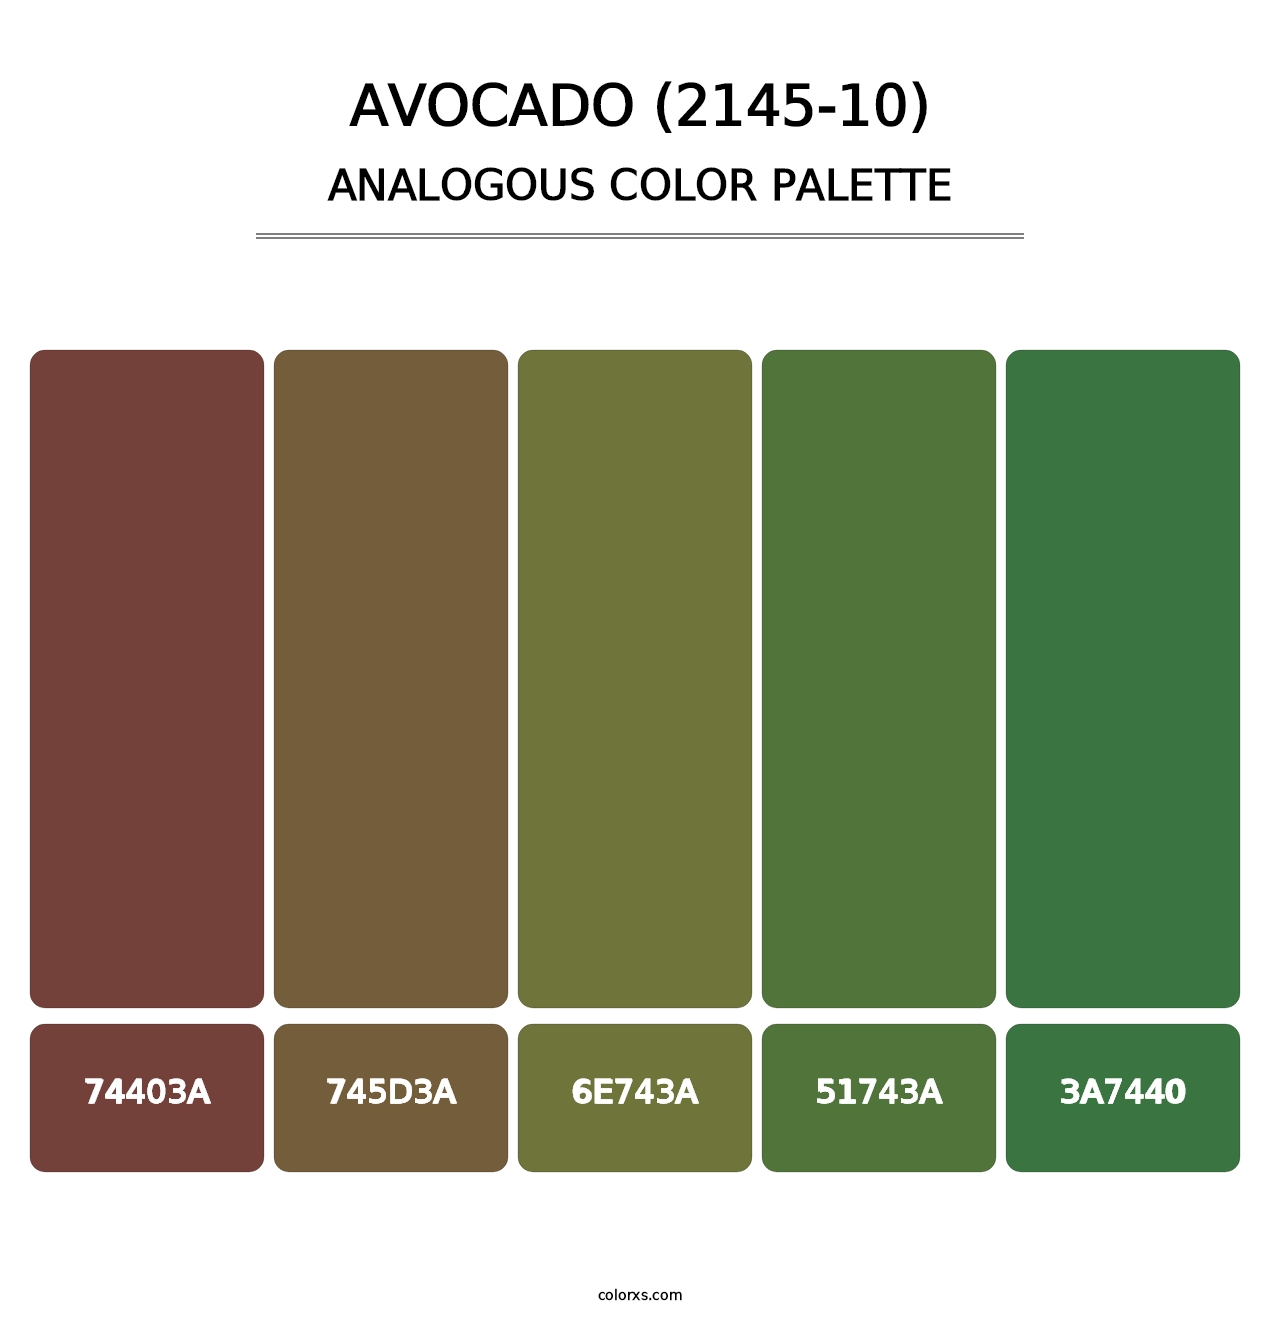 Avocado (2145-10) - Analogous Color Palette